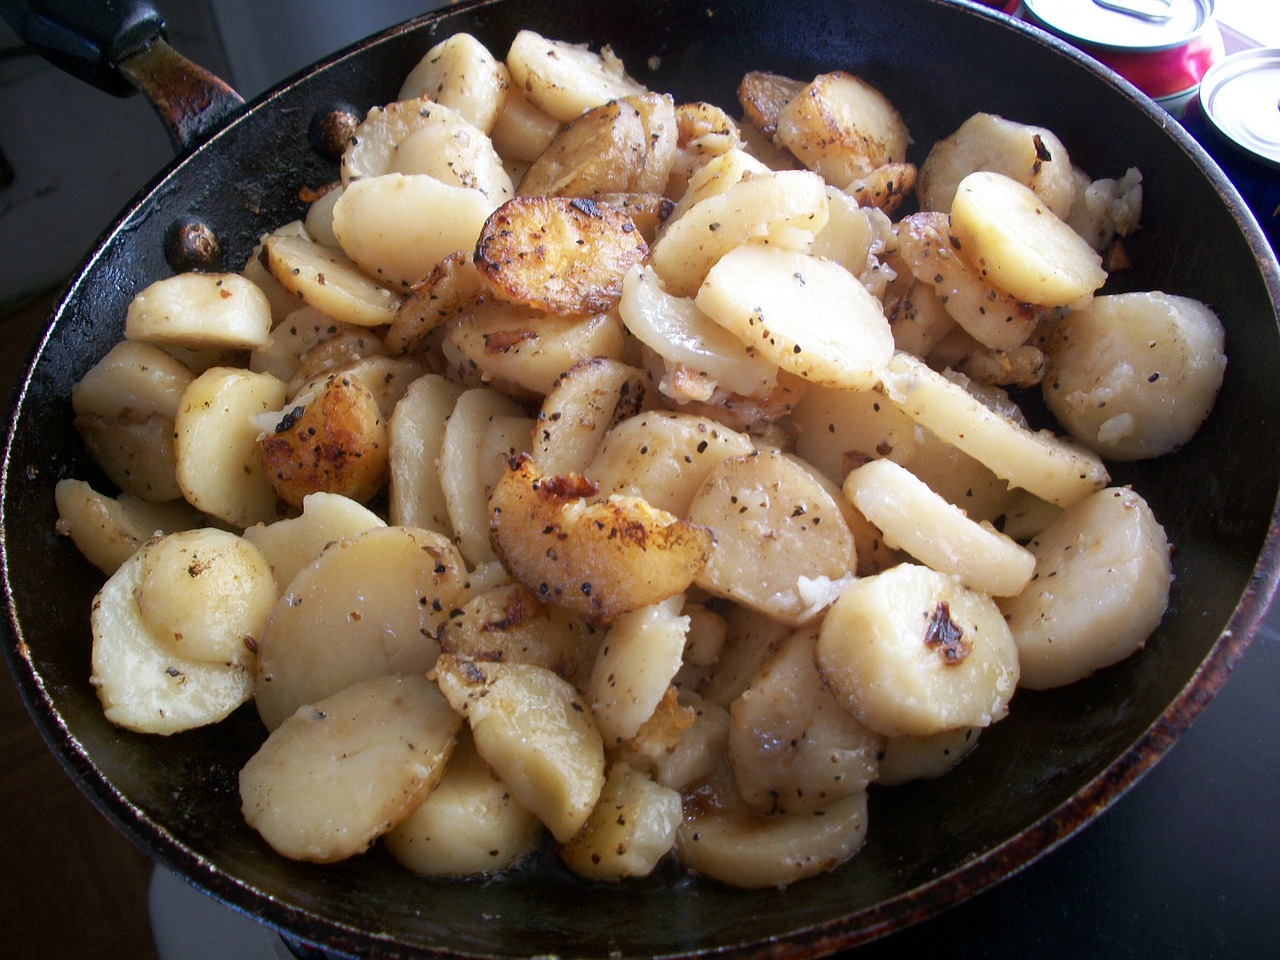 Khasta Aloo (Spicy Pan Fried Potatoes)